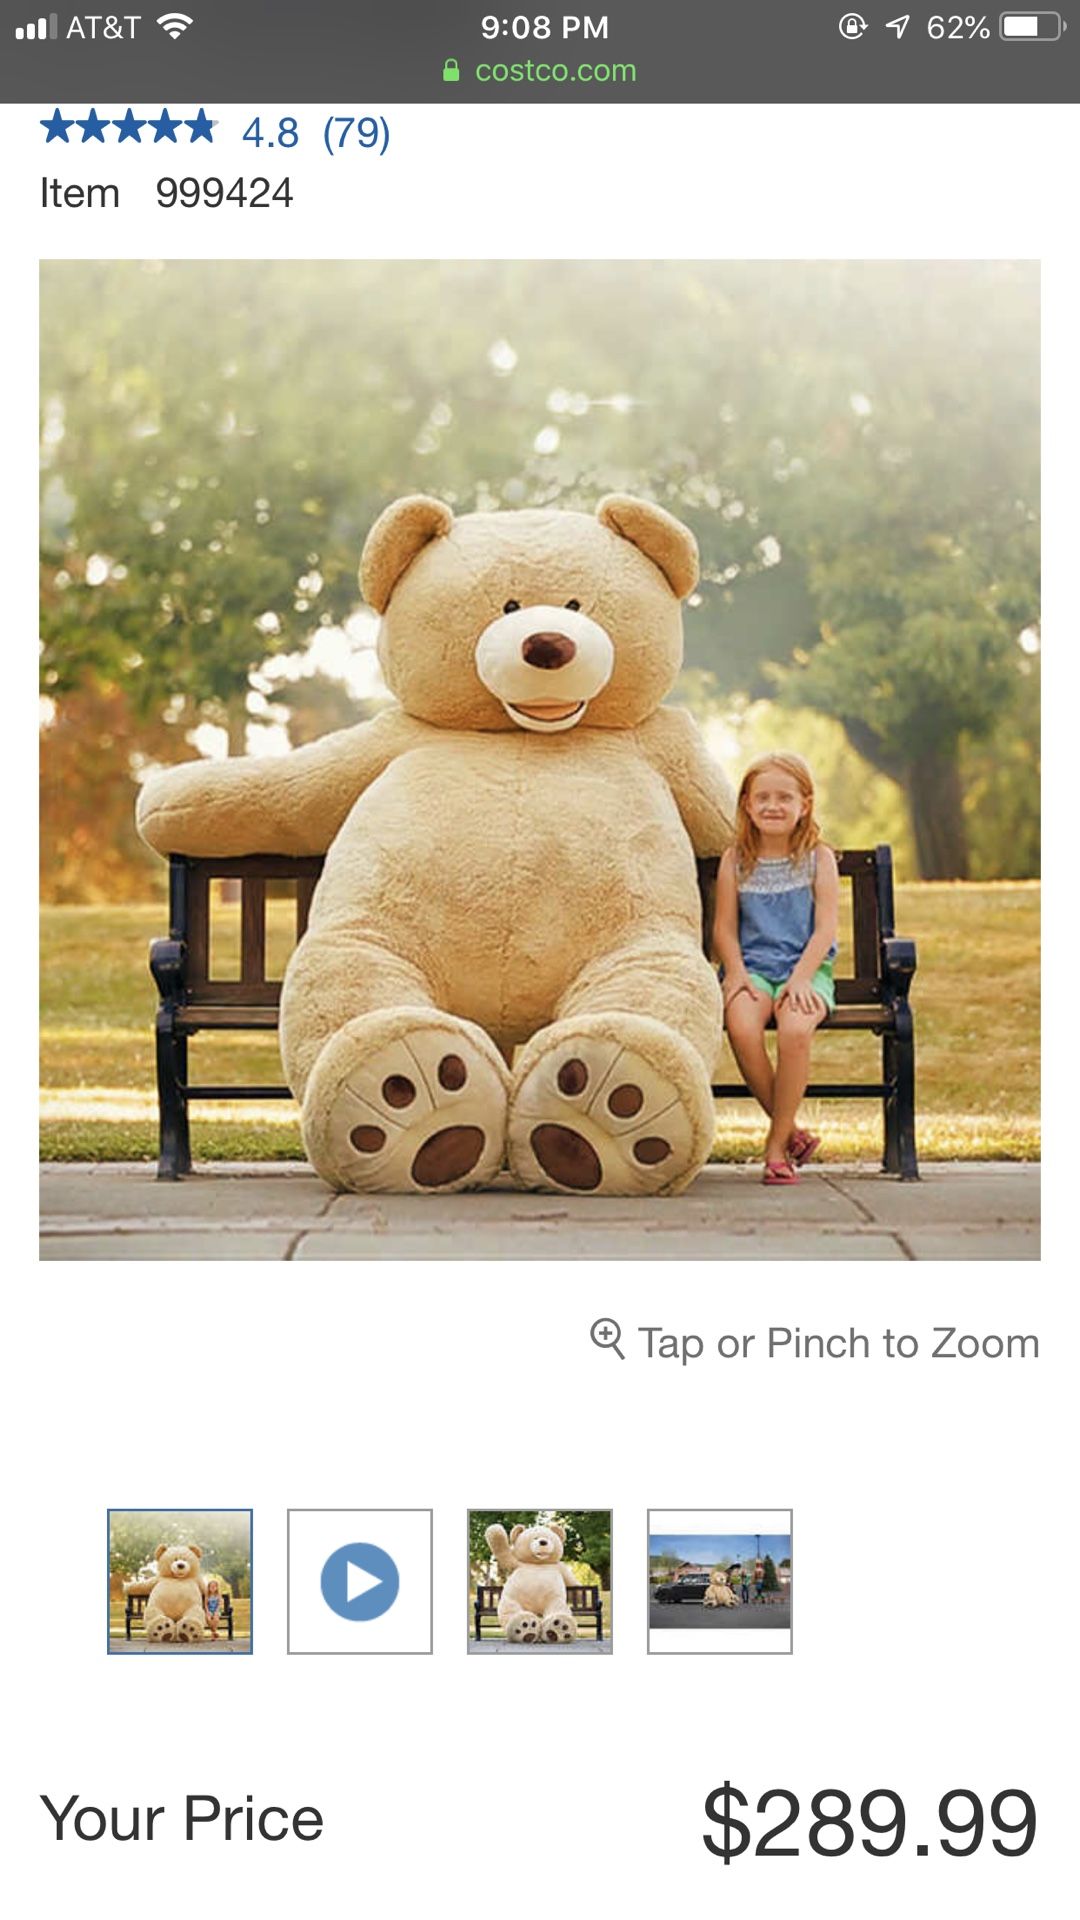 huge teddy bear